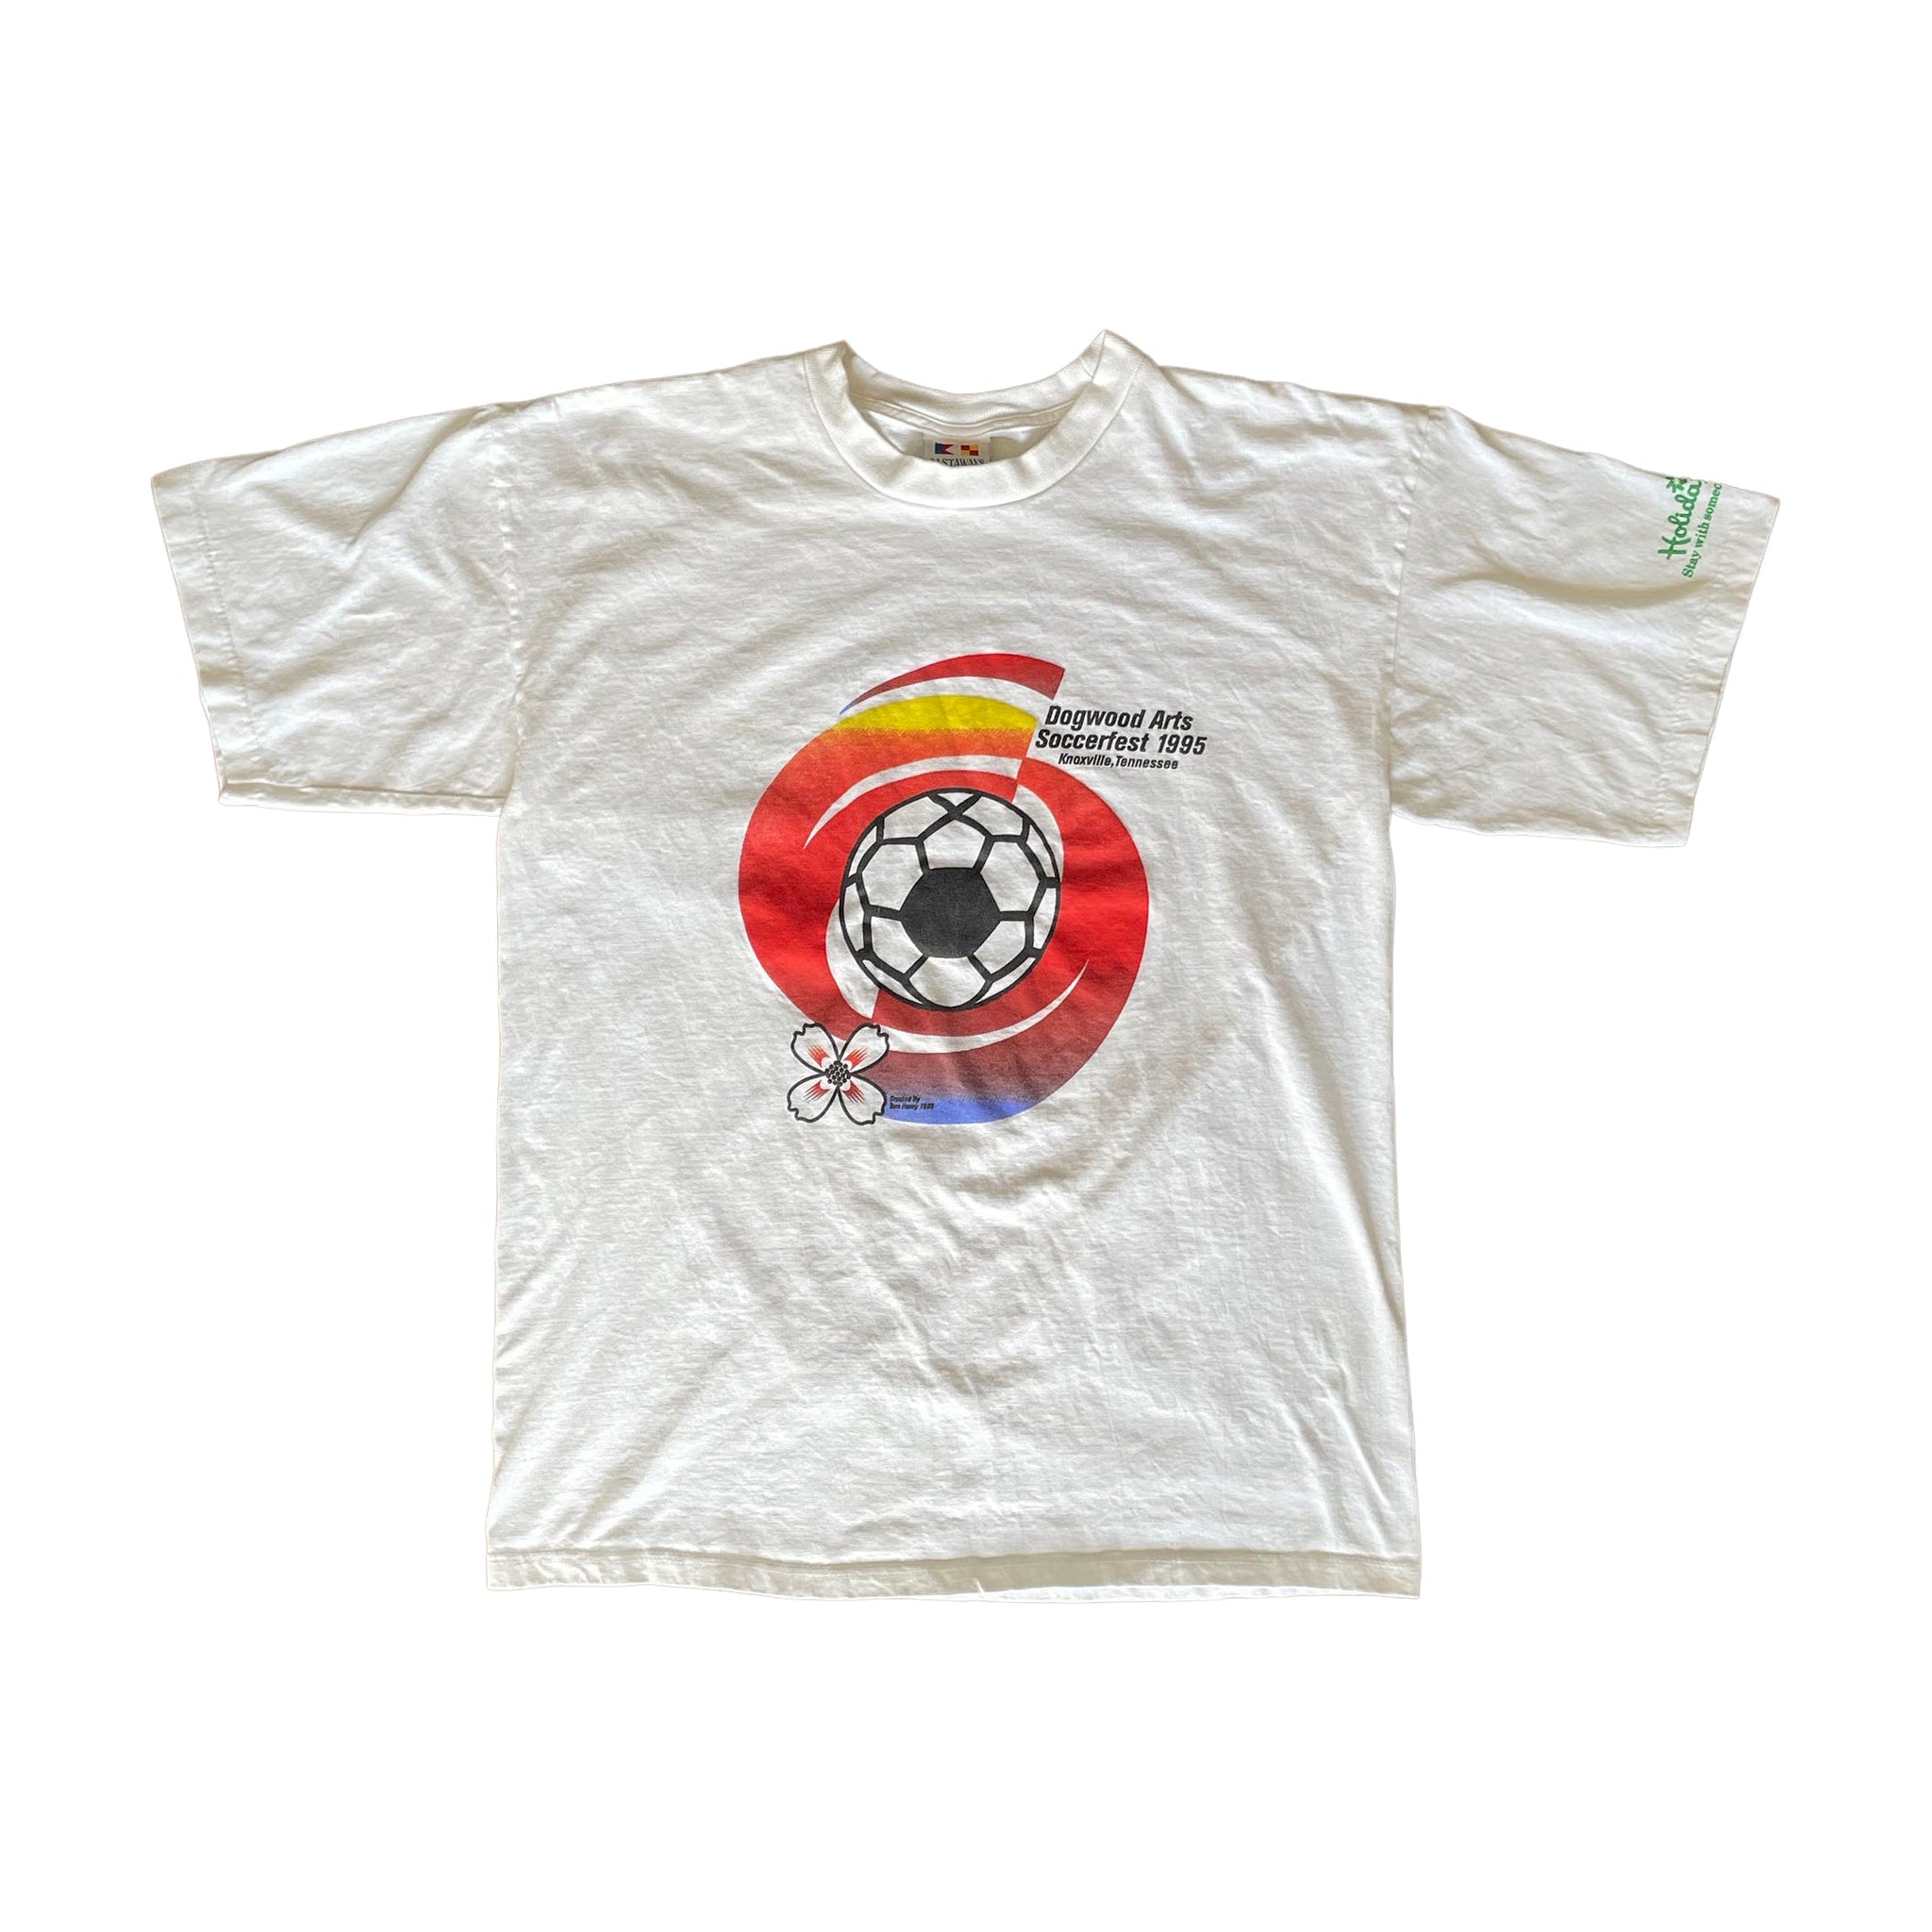 1995 Dogwood Arts Soccerfest T-Shirt - XL